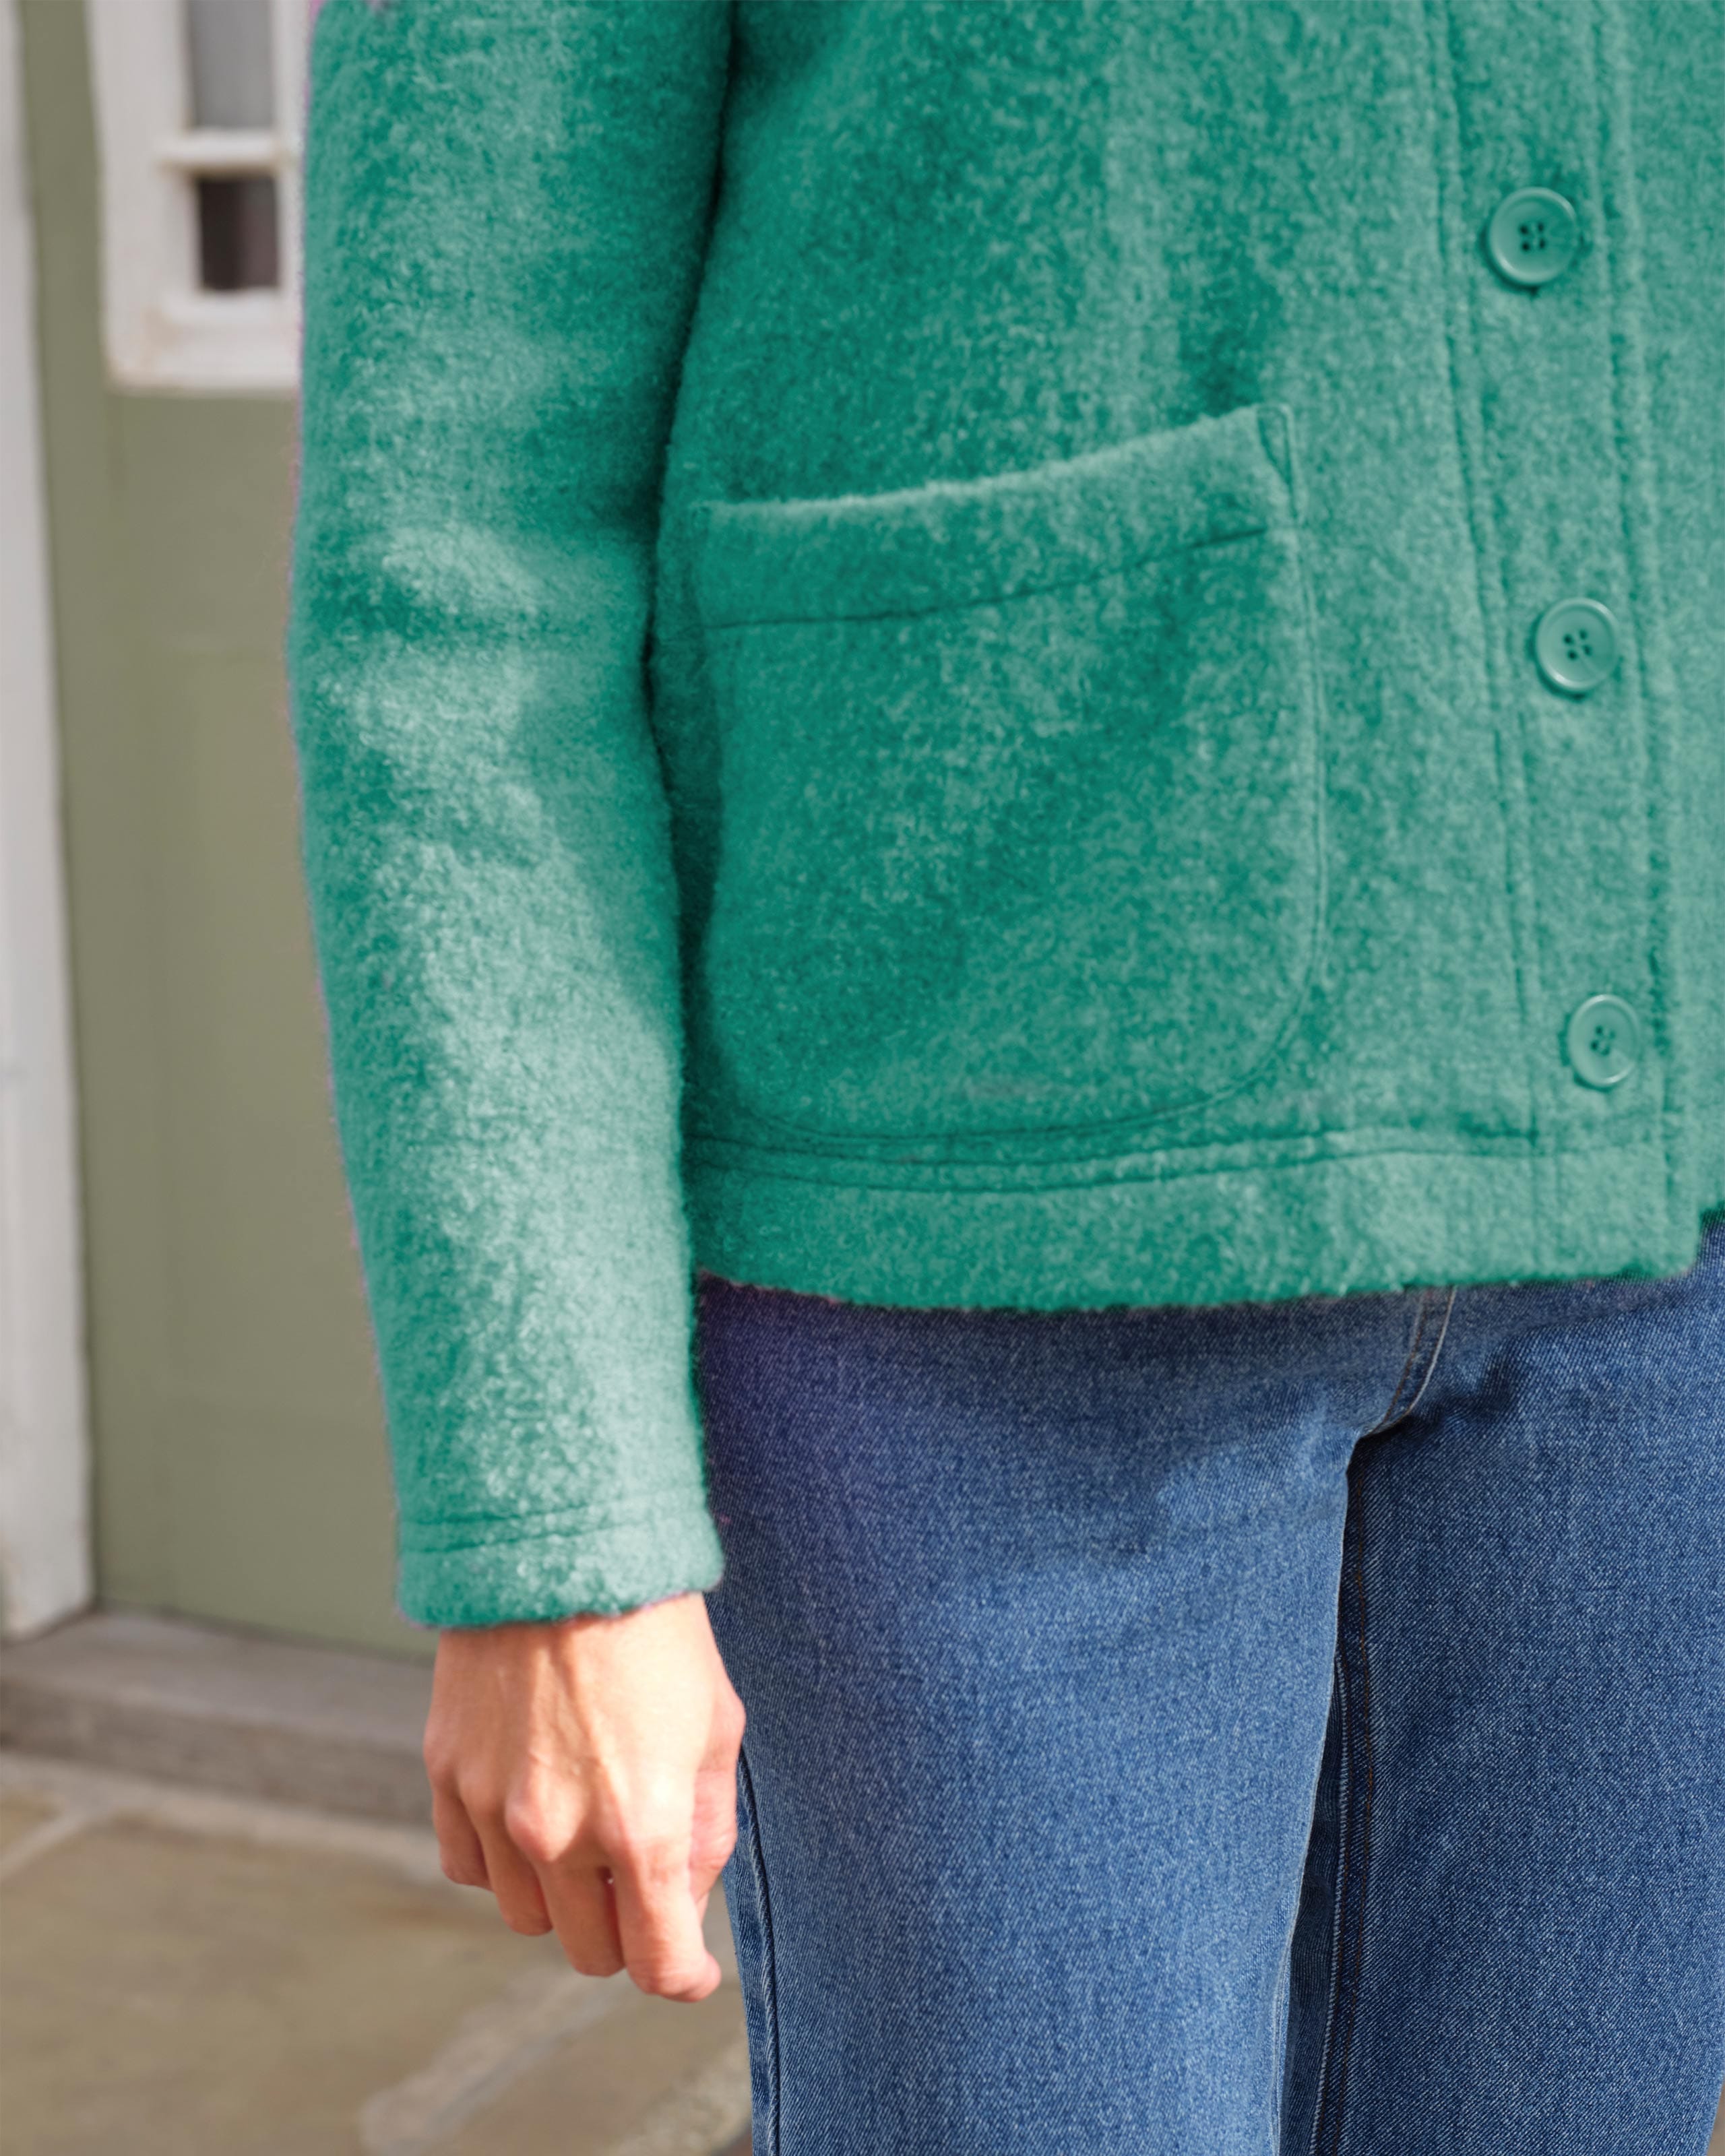 Viridian Green | Funnel Neck Button Jacket | WoolOvers UK